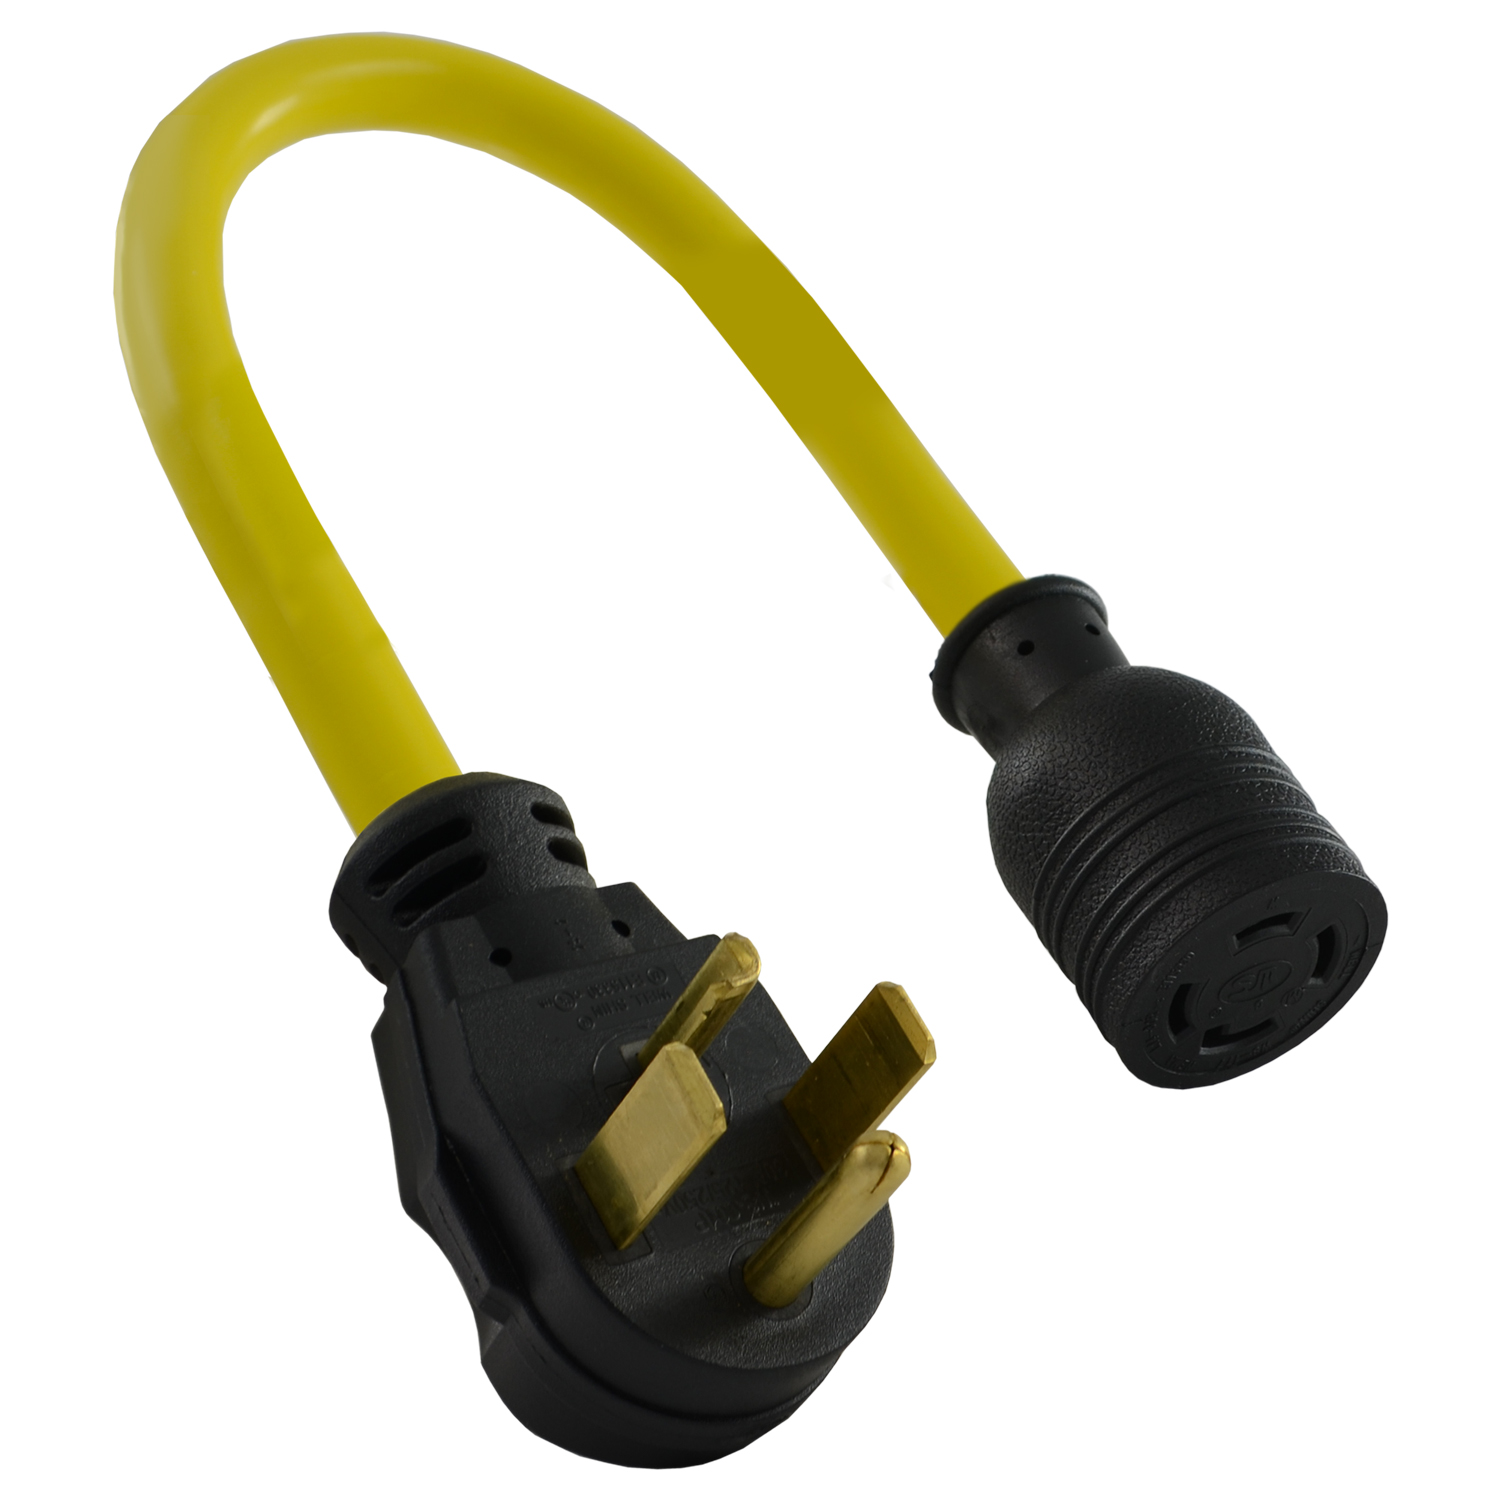 Conntek 14330 1.5-Foot Adapter 30 Amp NEMA 14-30P 4 Prong Male Plug To 30 Amp 125/250 L14-30R Volt Locking Female Connector 